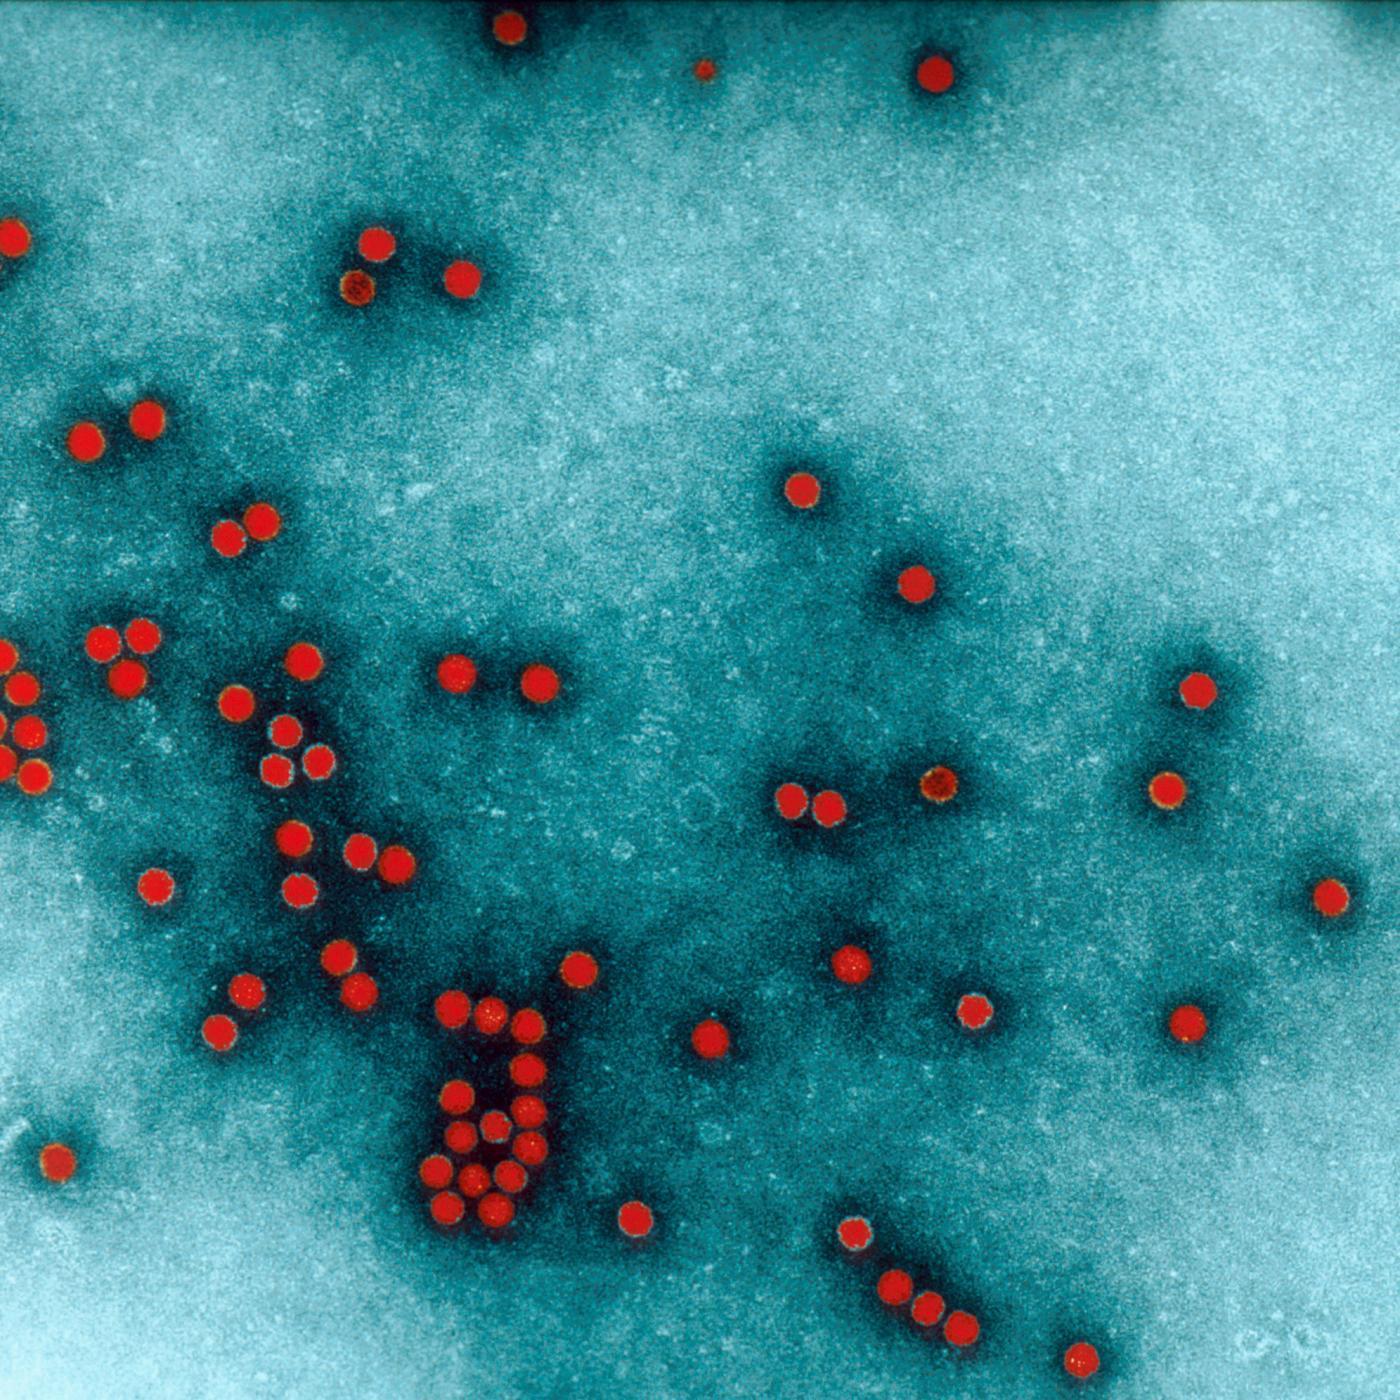 Poliovirus, agent de la poliomyélite. Image colorisée - Institut Pasteur